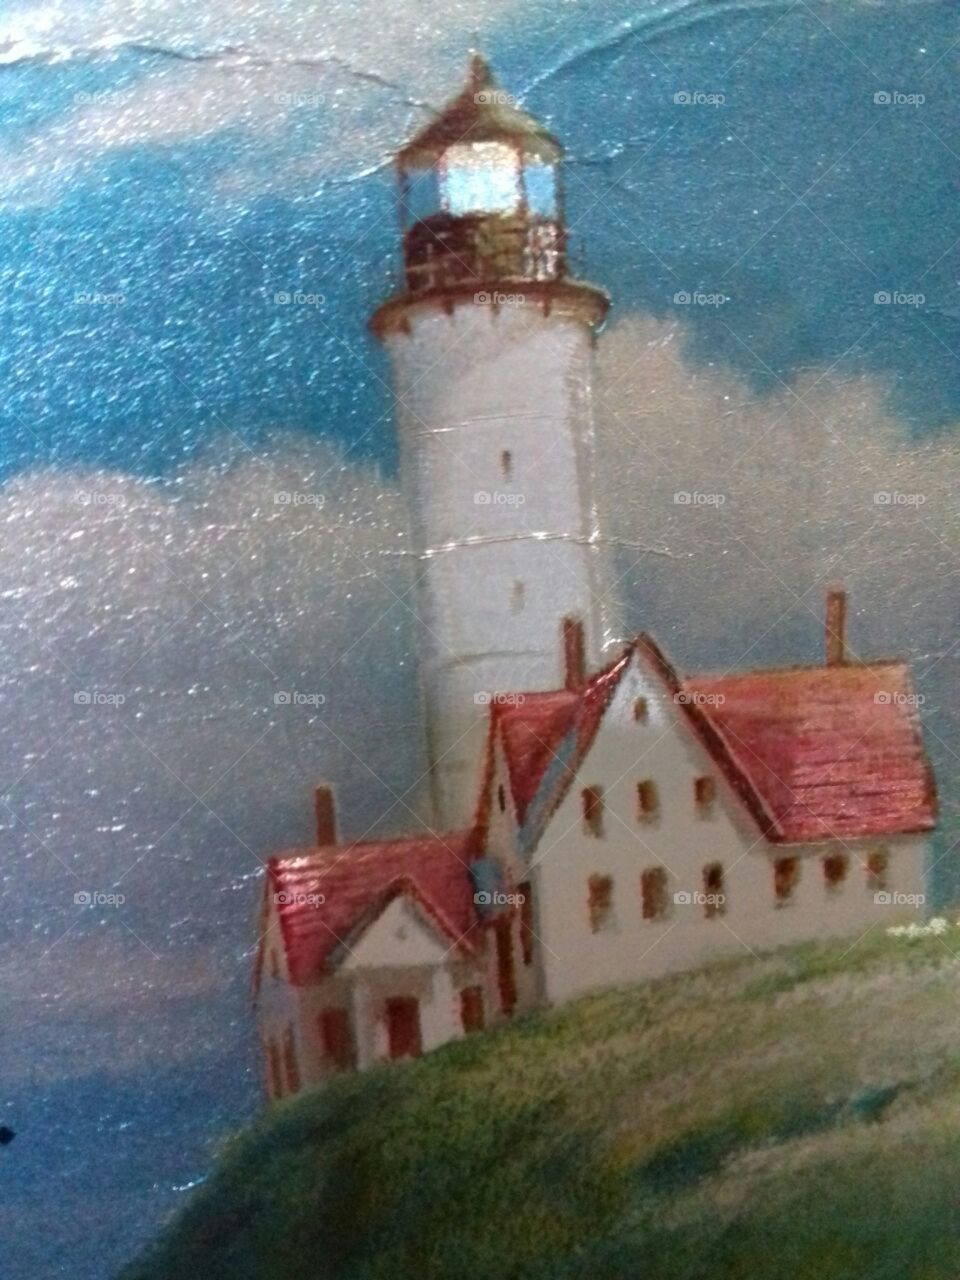 light house